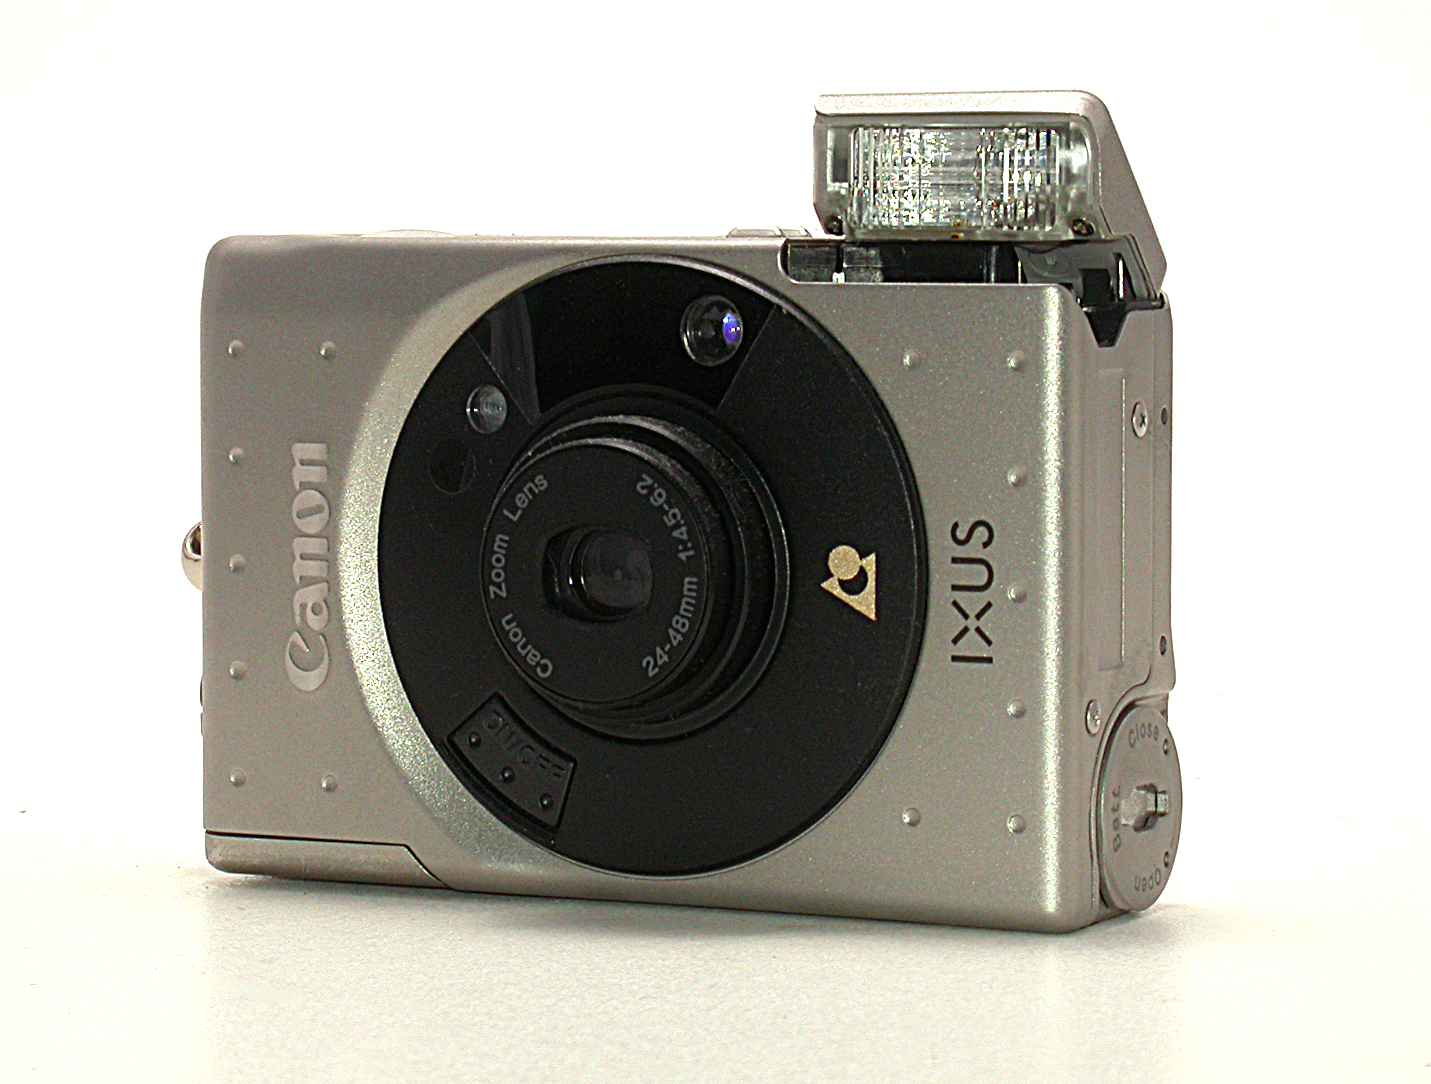 File:Canon IXUS APS 20090824.jpg - Wikimedia Commons